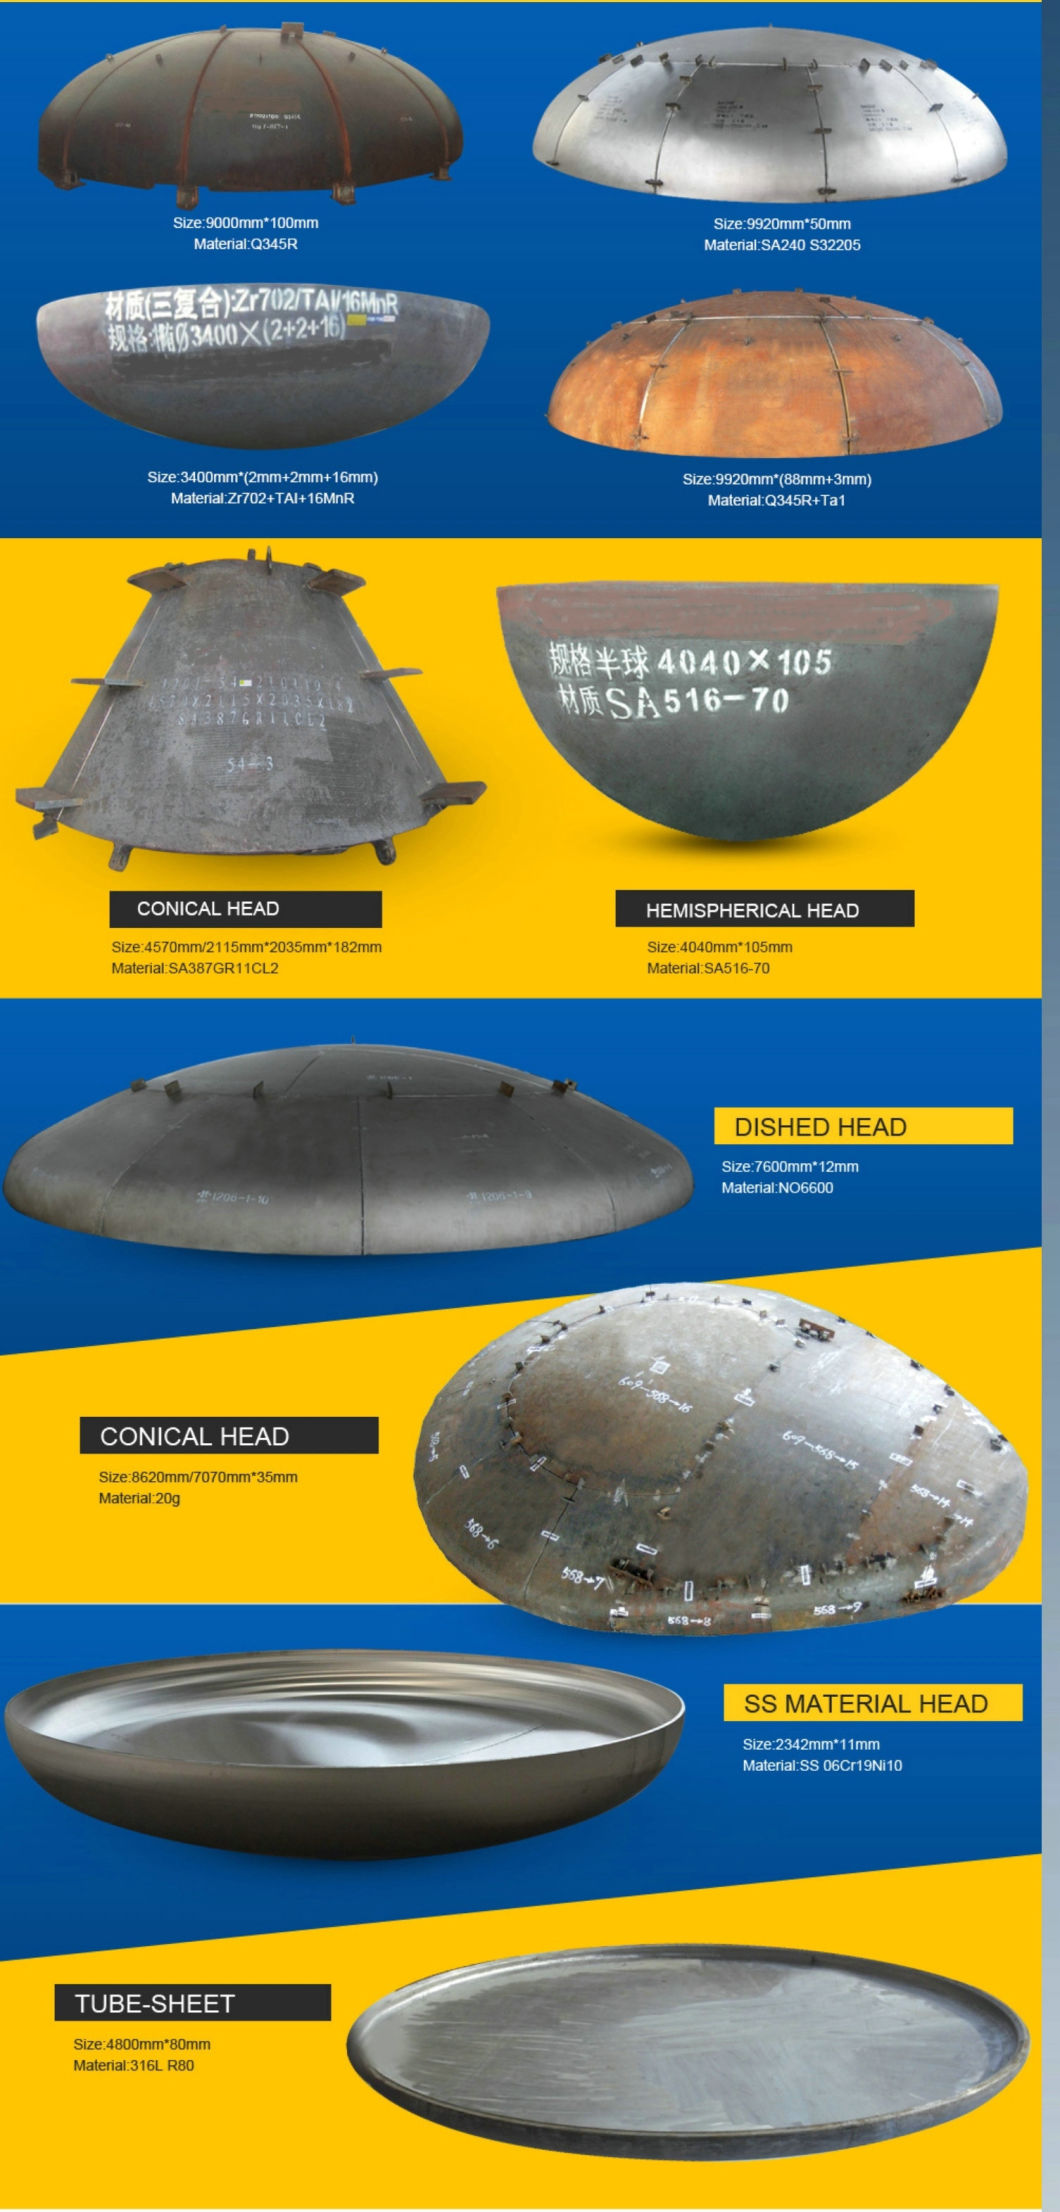 ASME Pressure Vessel Heads (Hemispherical Heads) Hha2100mm*120mm SA516 Gr70n